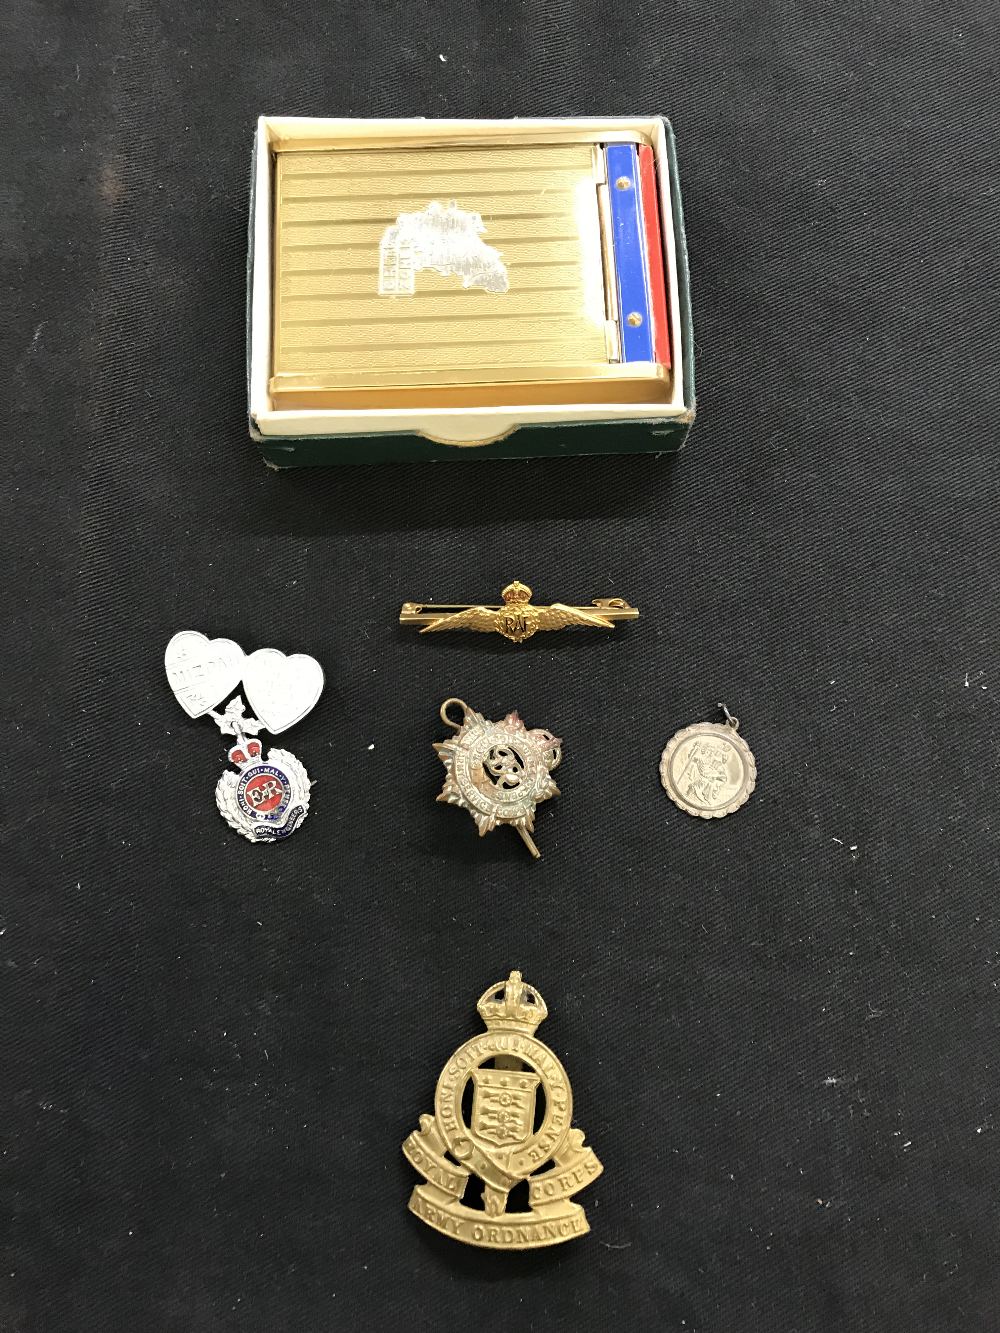 Badges: Royal Ordinance Corps, Army Service Corps, yellow metal RAF sweetheart badge, Royal